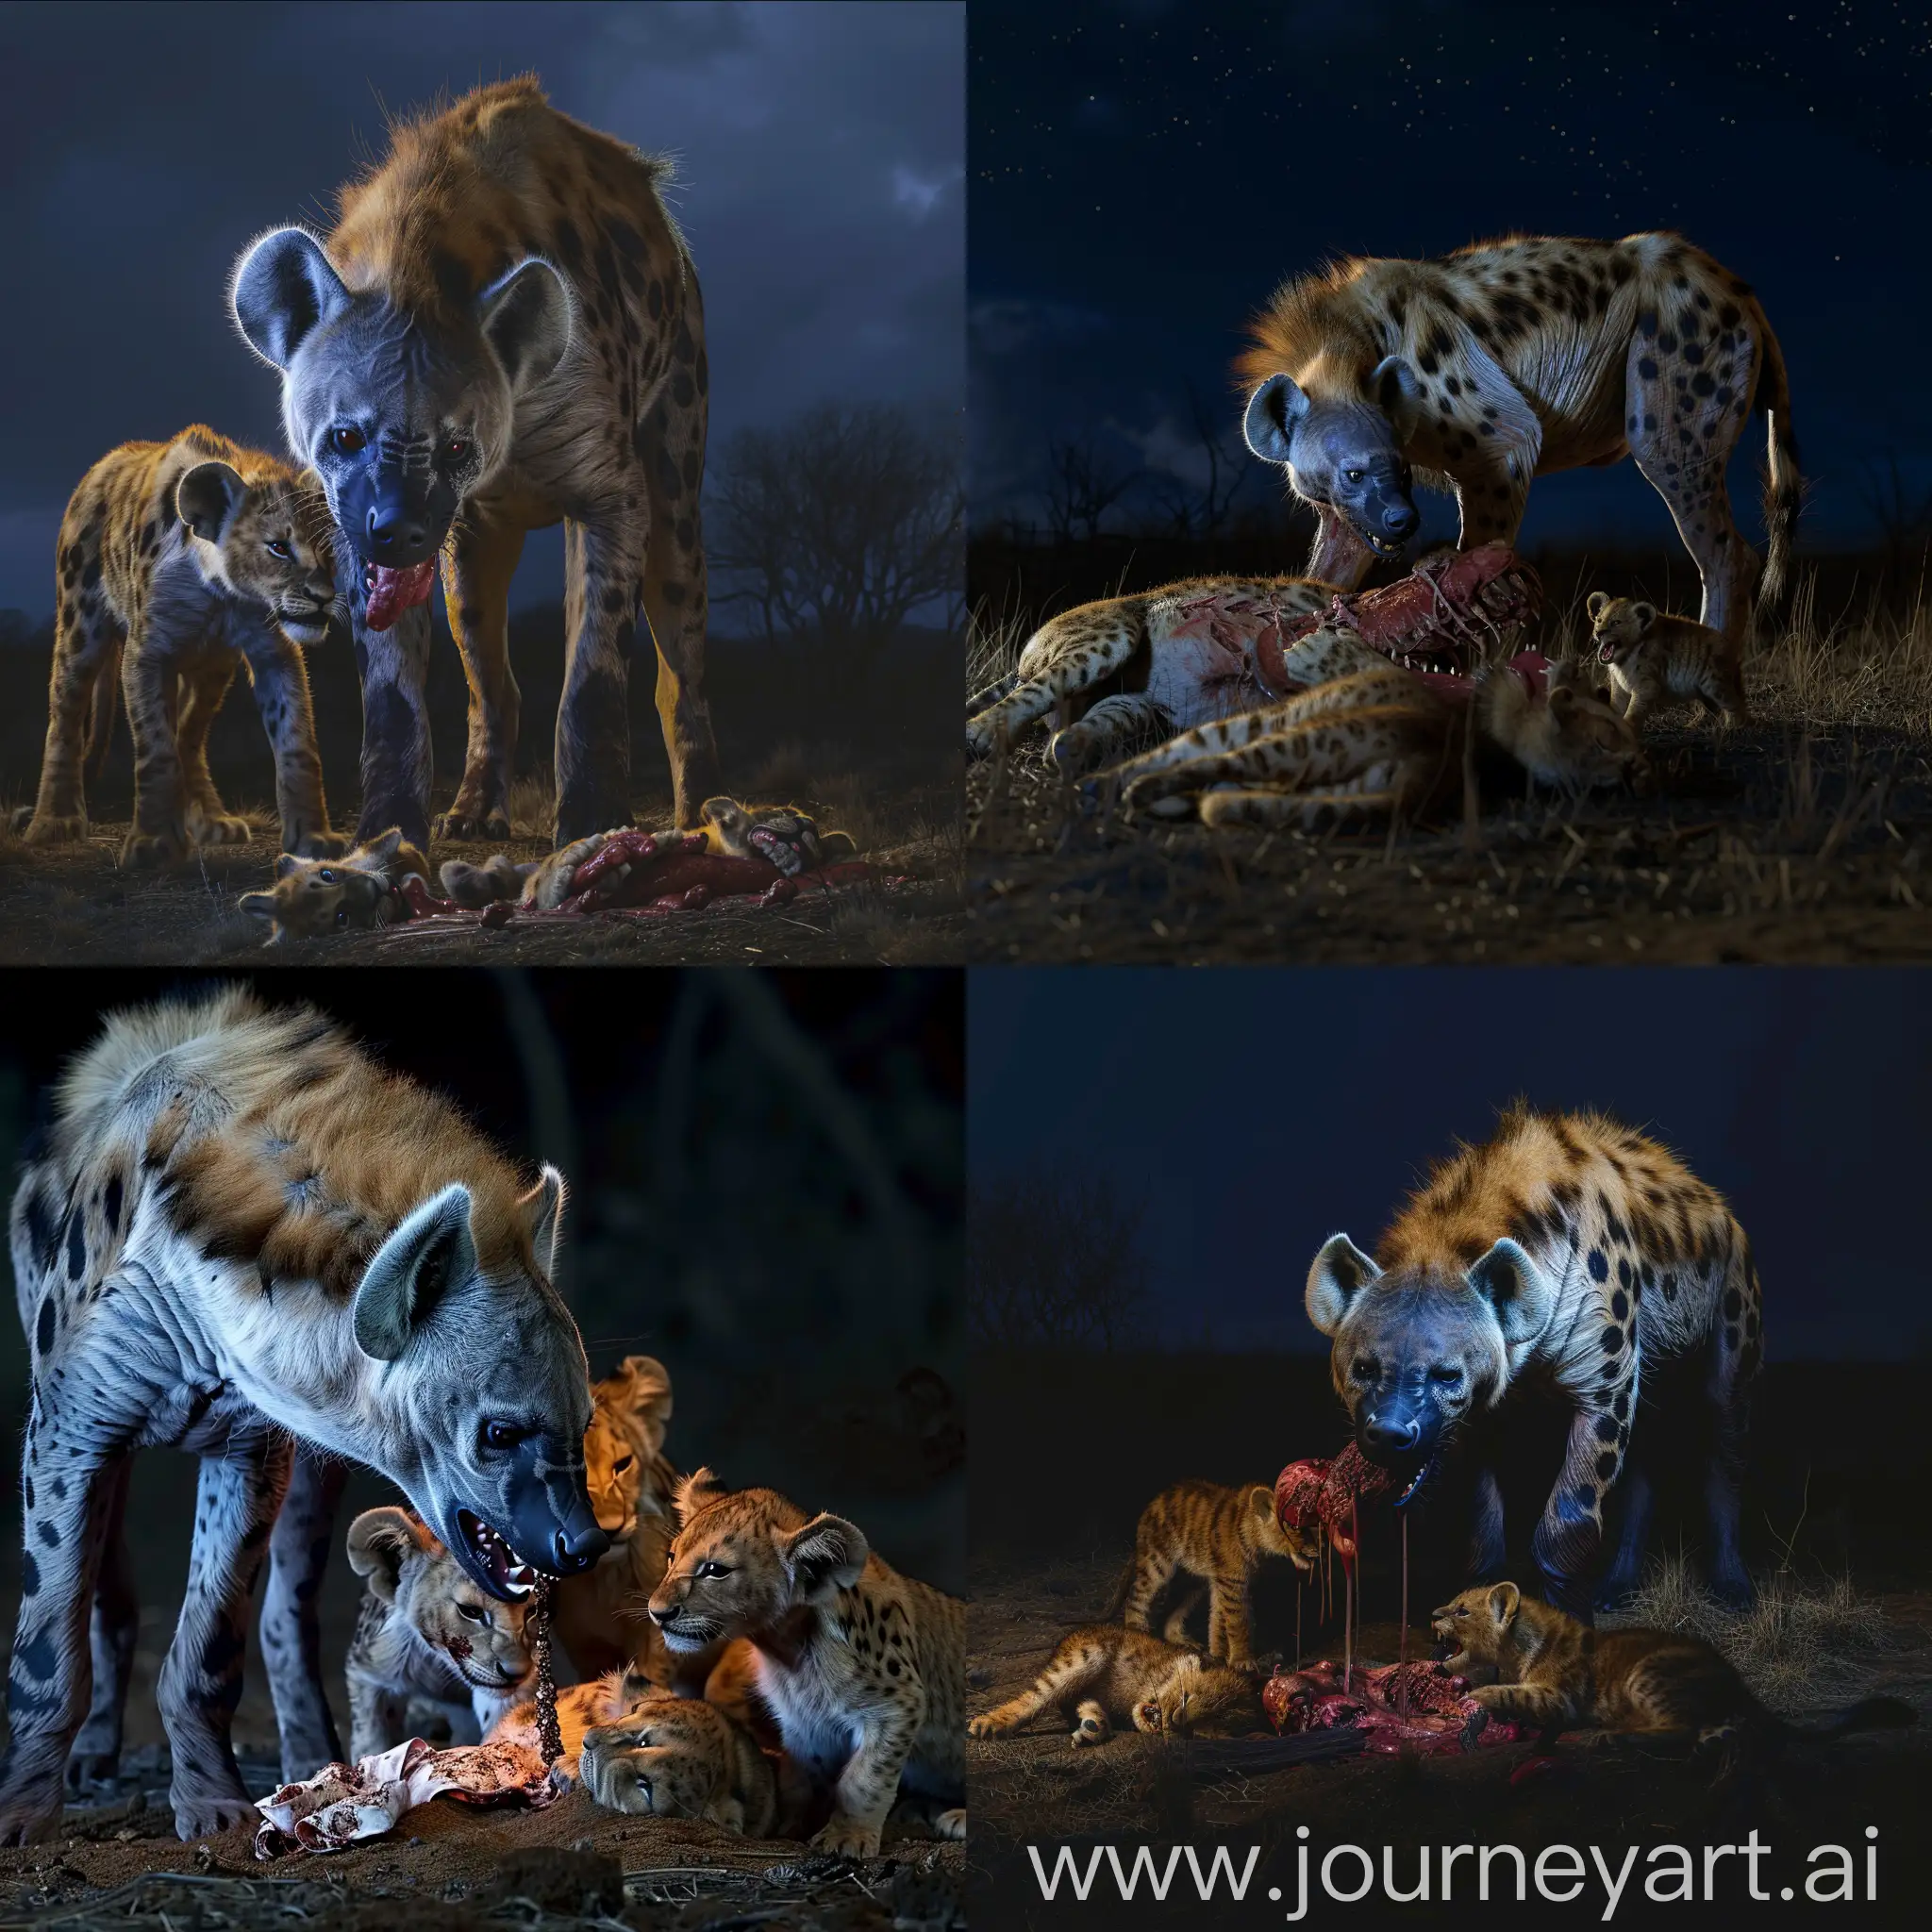 Nighttime-Predation-Hyena-Feeding-on-Lion-Cubs